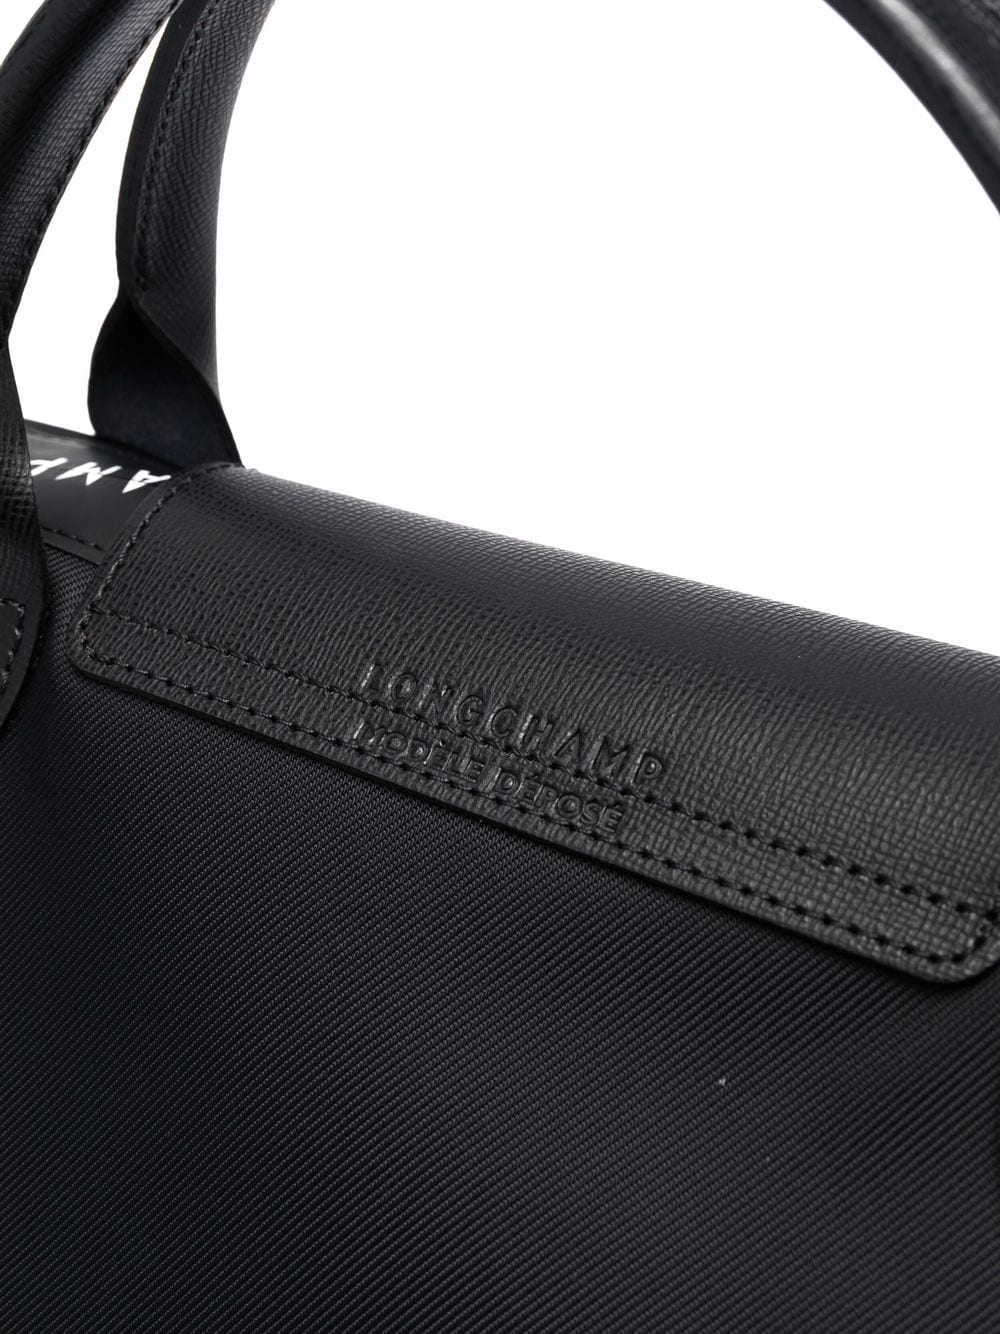 Longchamp Small Le Pliage Energy Bag - Farfetch